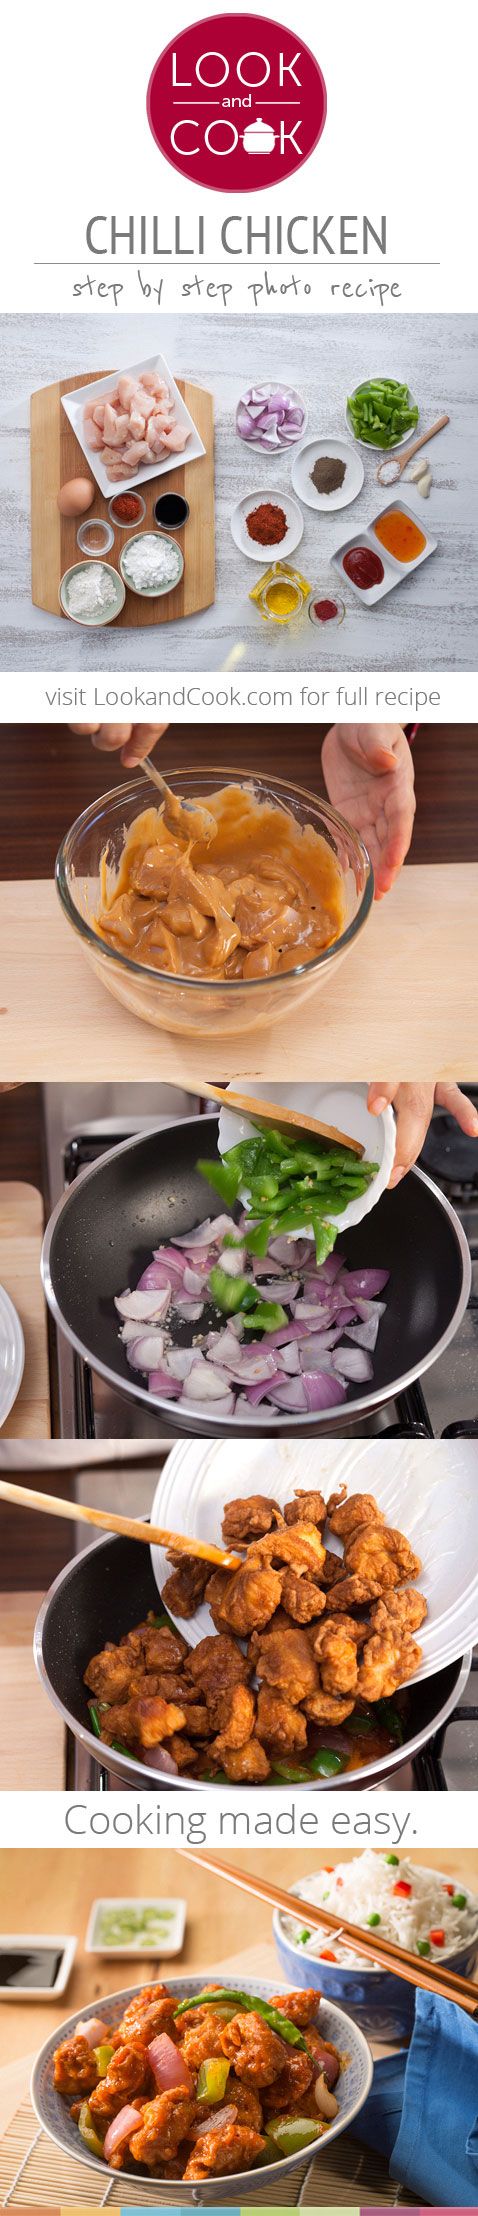 How to make chilli chicken